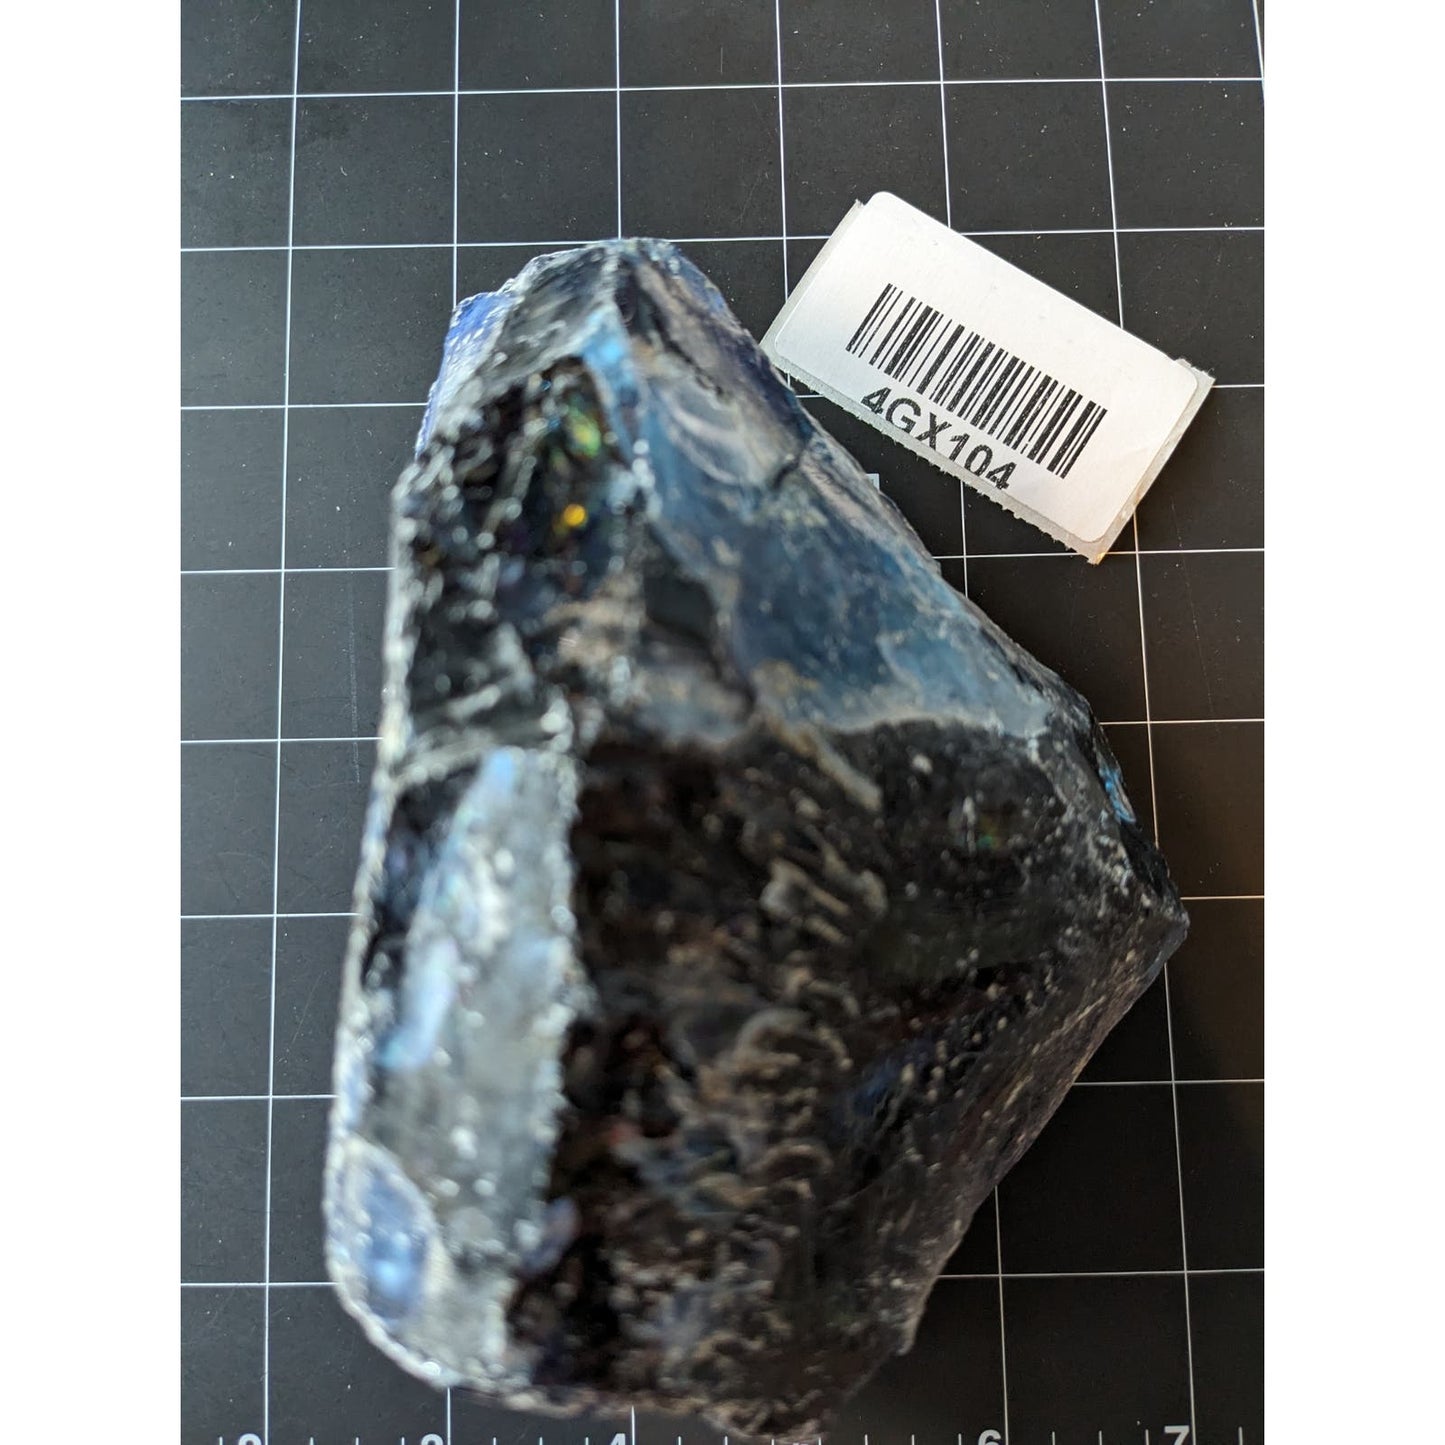 Cobalt Blue Art Glass Cullet Glowing Translucent Manganese Slag #4GX104